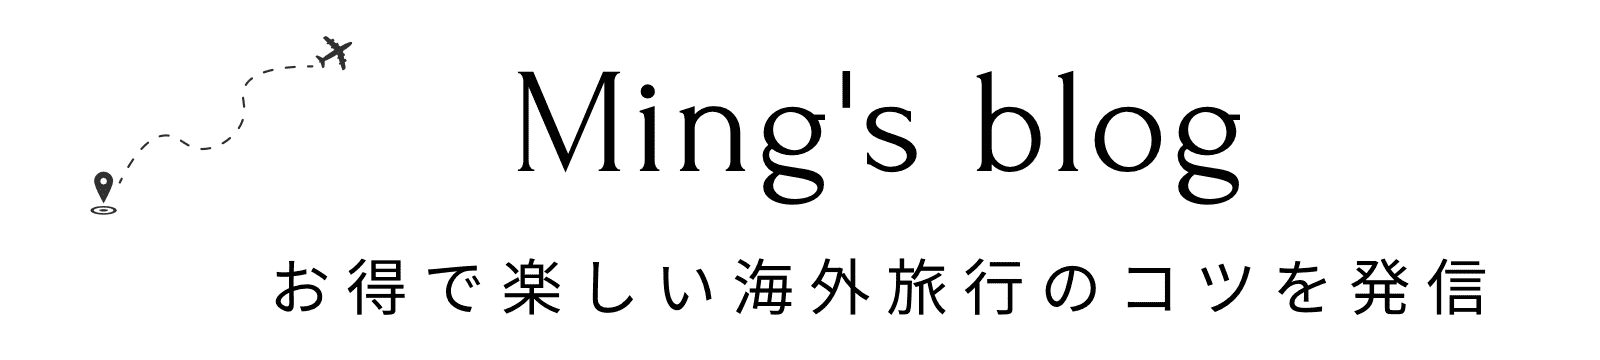 Ming’s blog